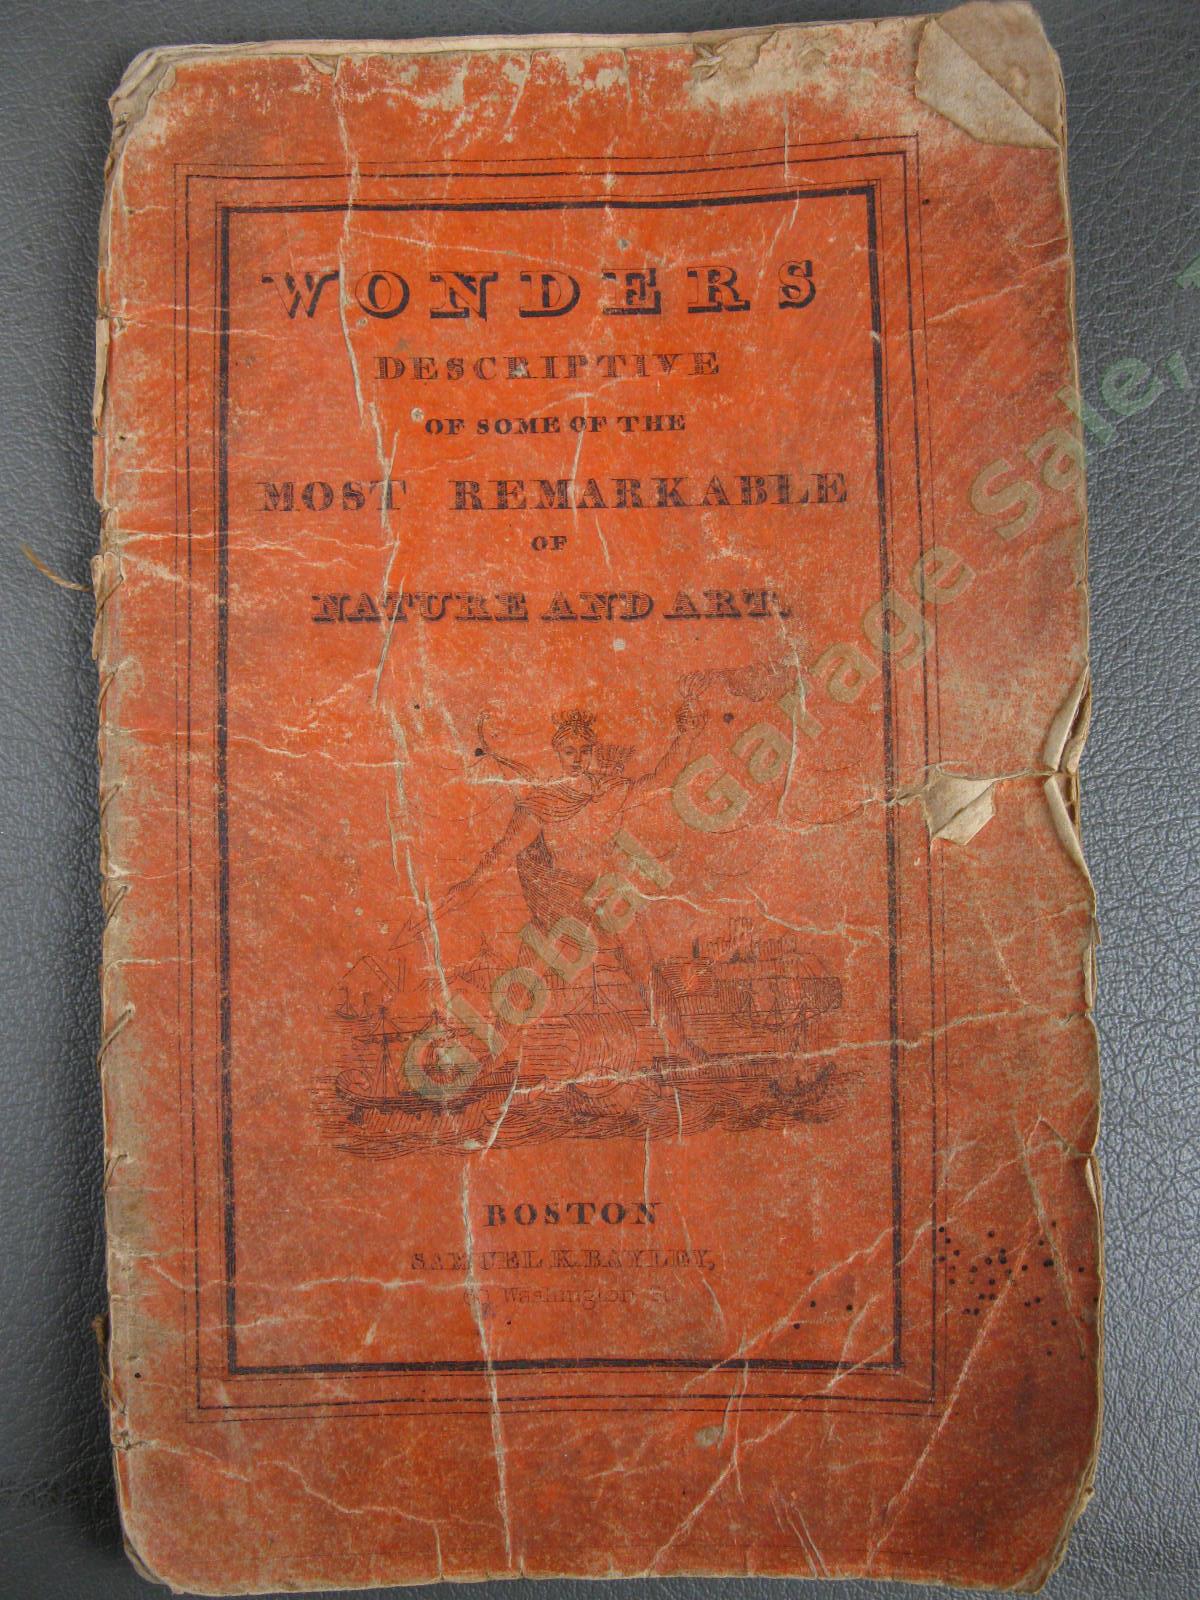 RARE 1830 Book WONDERS Some Most Remarkable Nature Art Samuel Bayley Boston NR